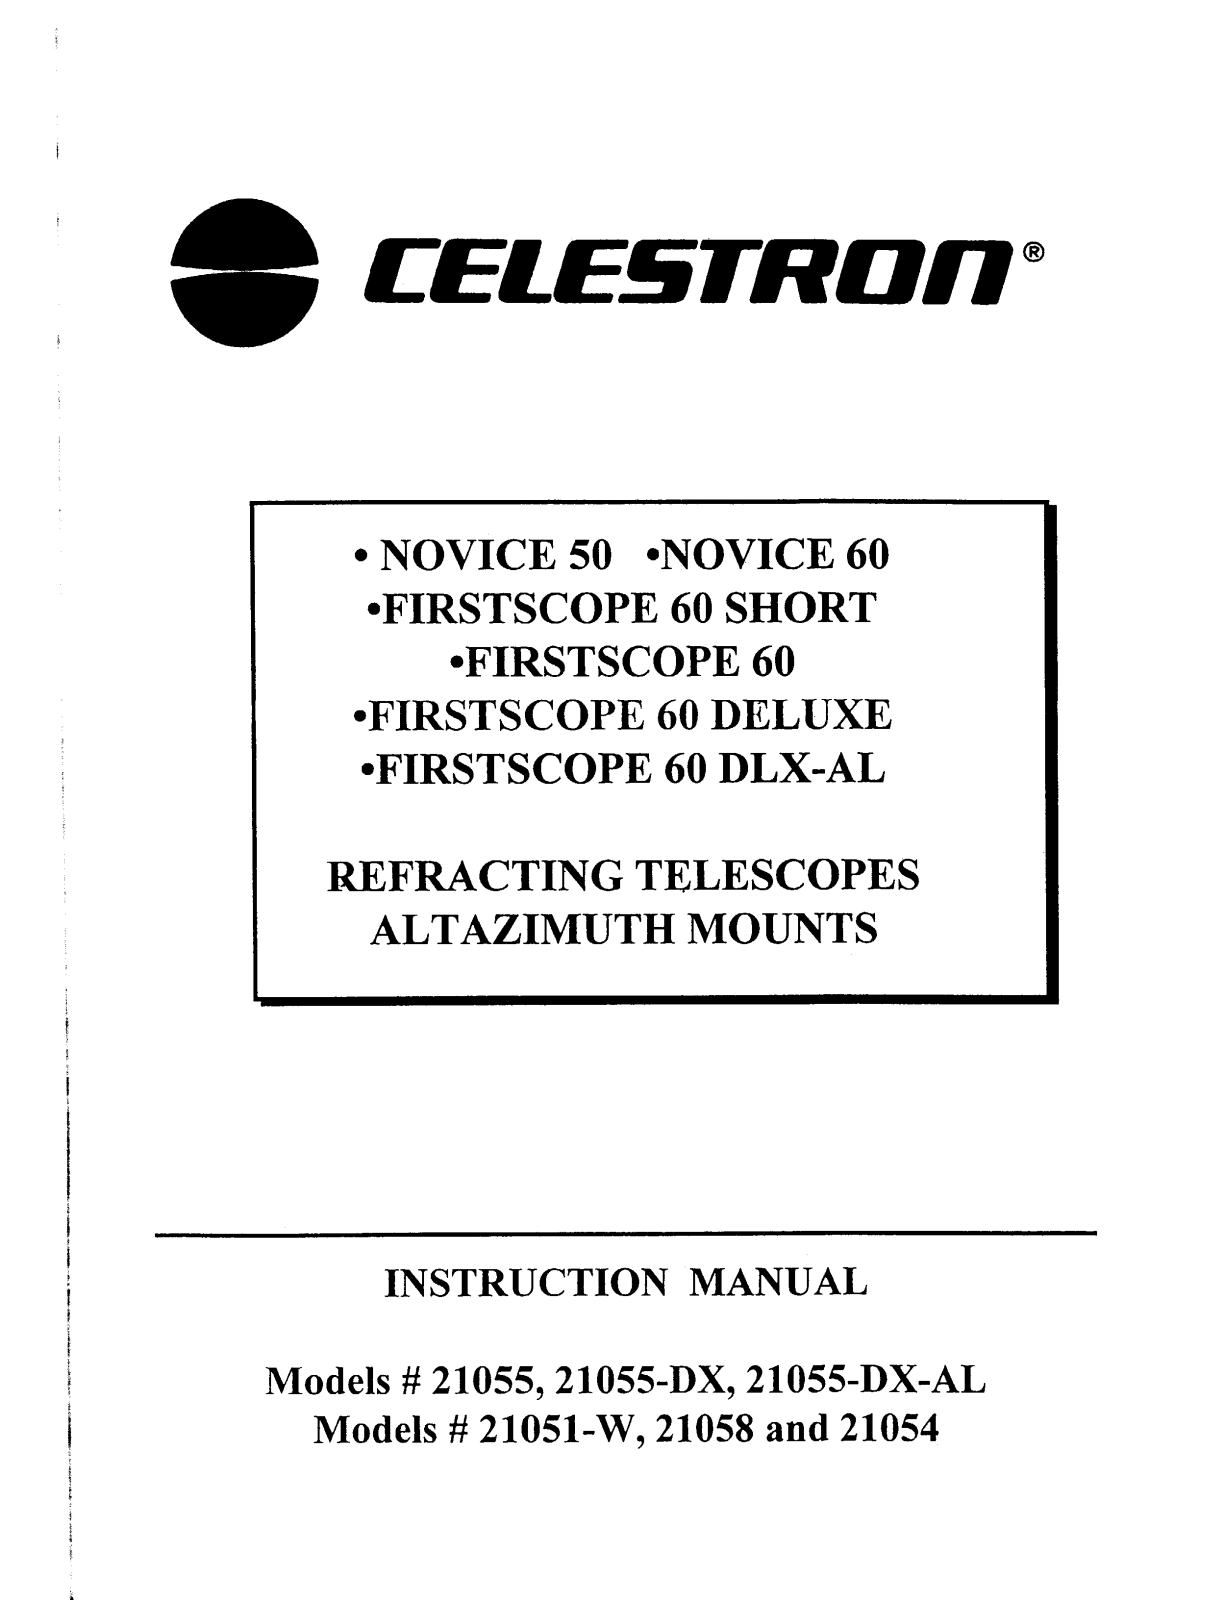 Celestron 21055, 21058, 21051-W, 21054, 21055-DX User Manual